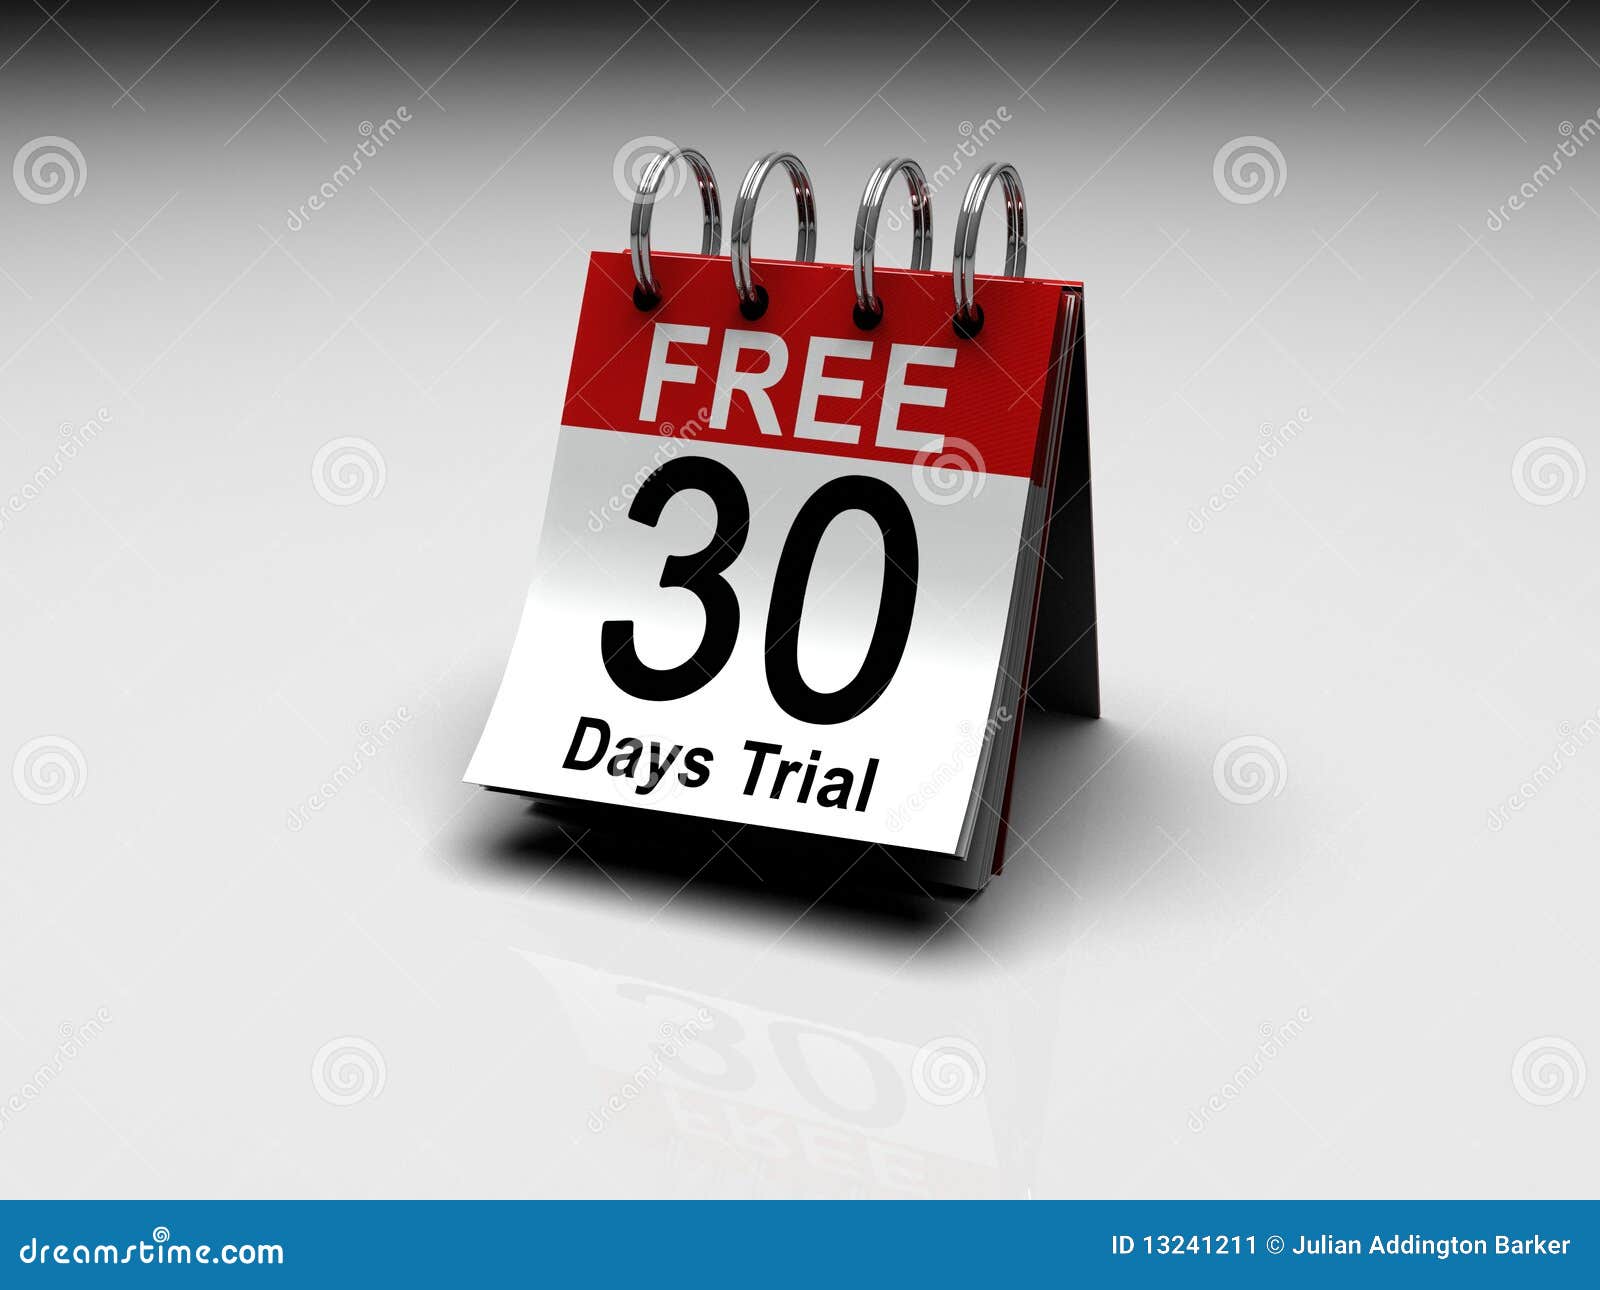 free 30 day trial vyvanse